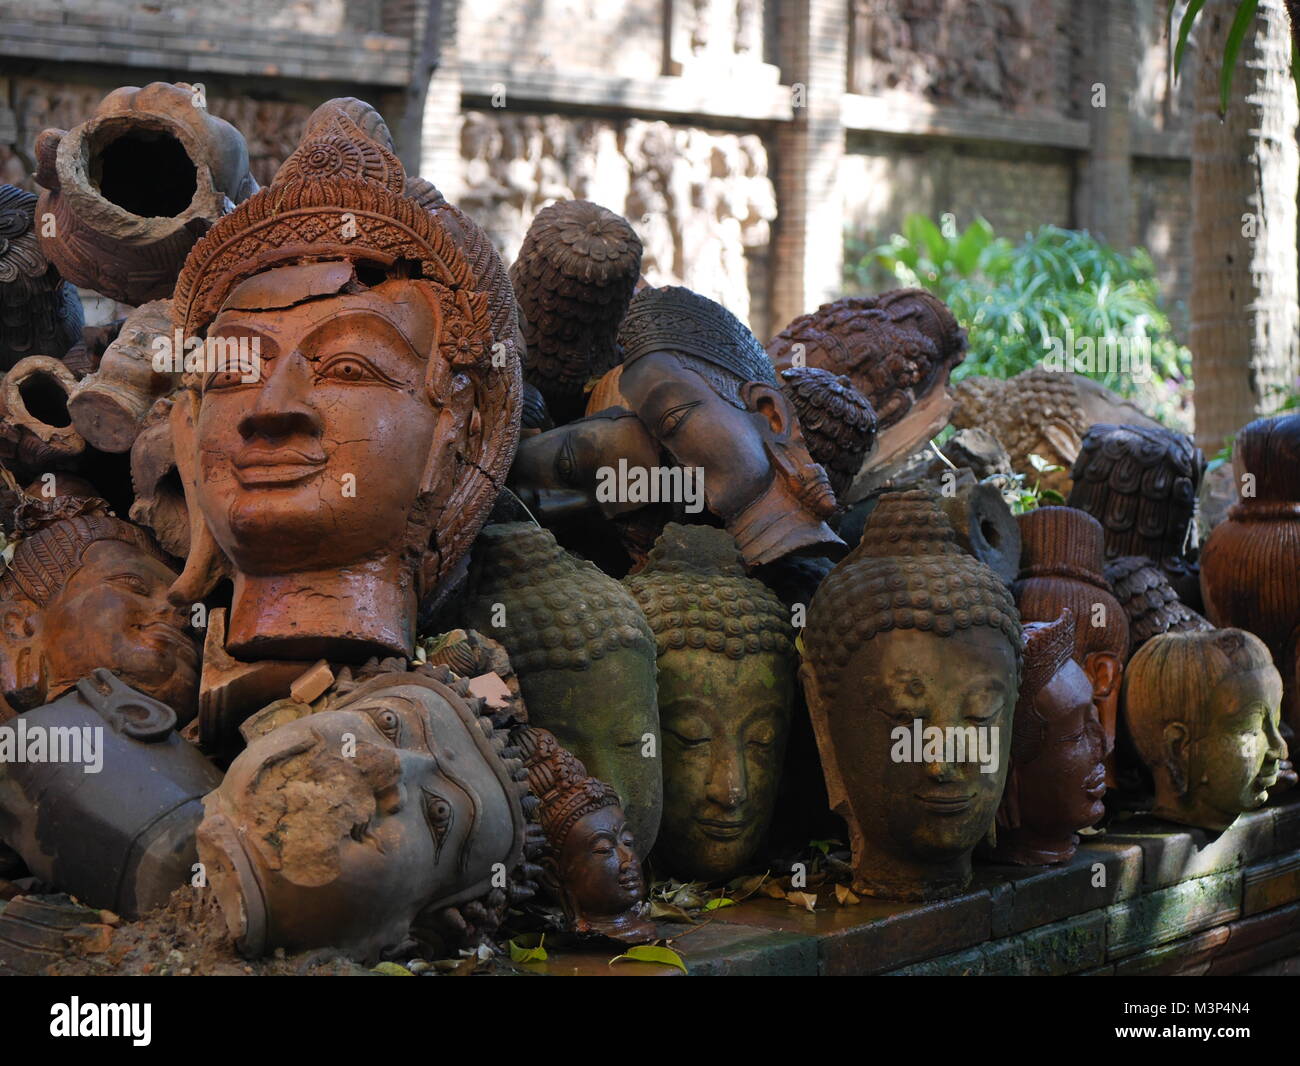 Clay Buddha statues, Chiang Mai, Thailand Stock Photo